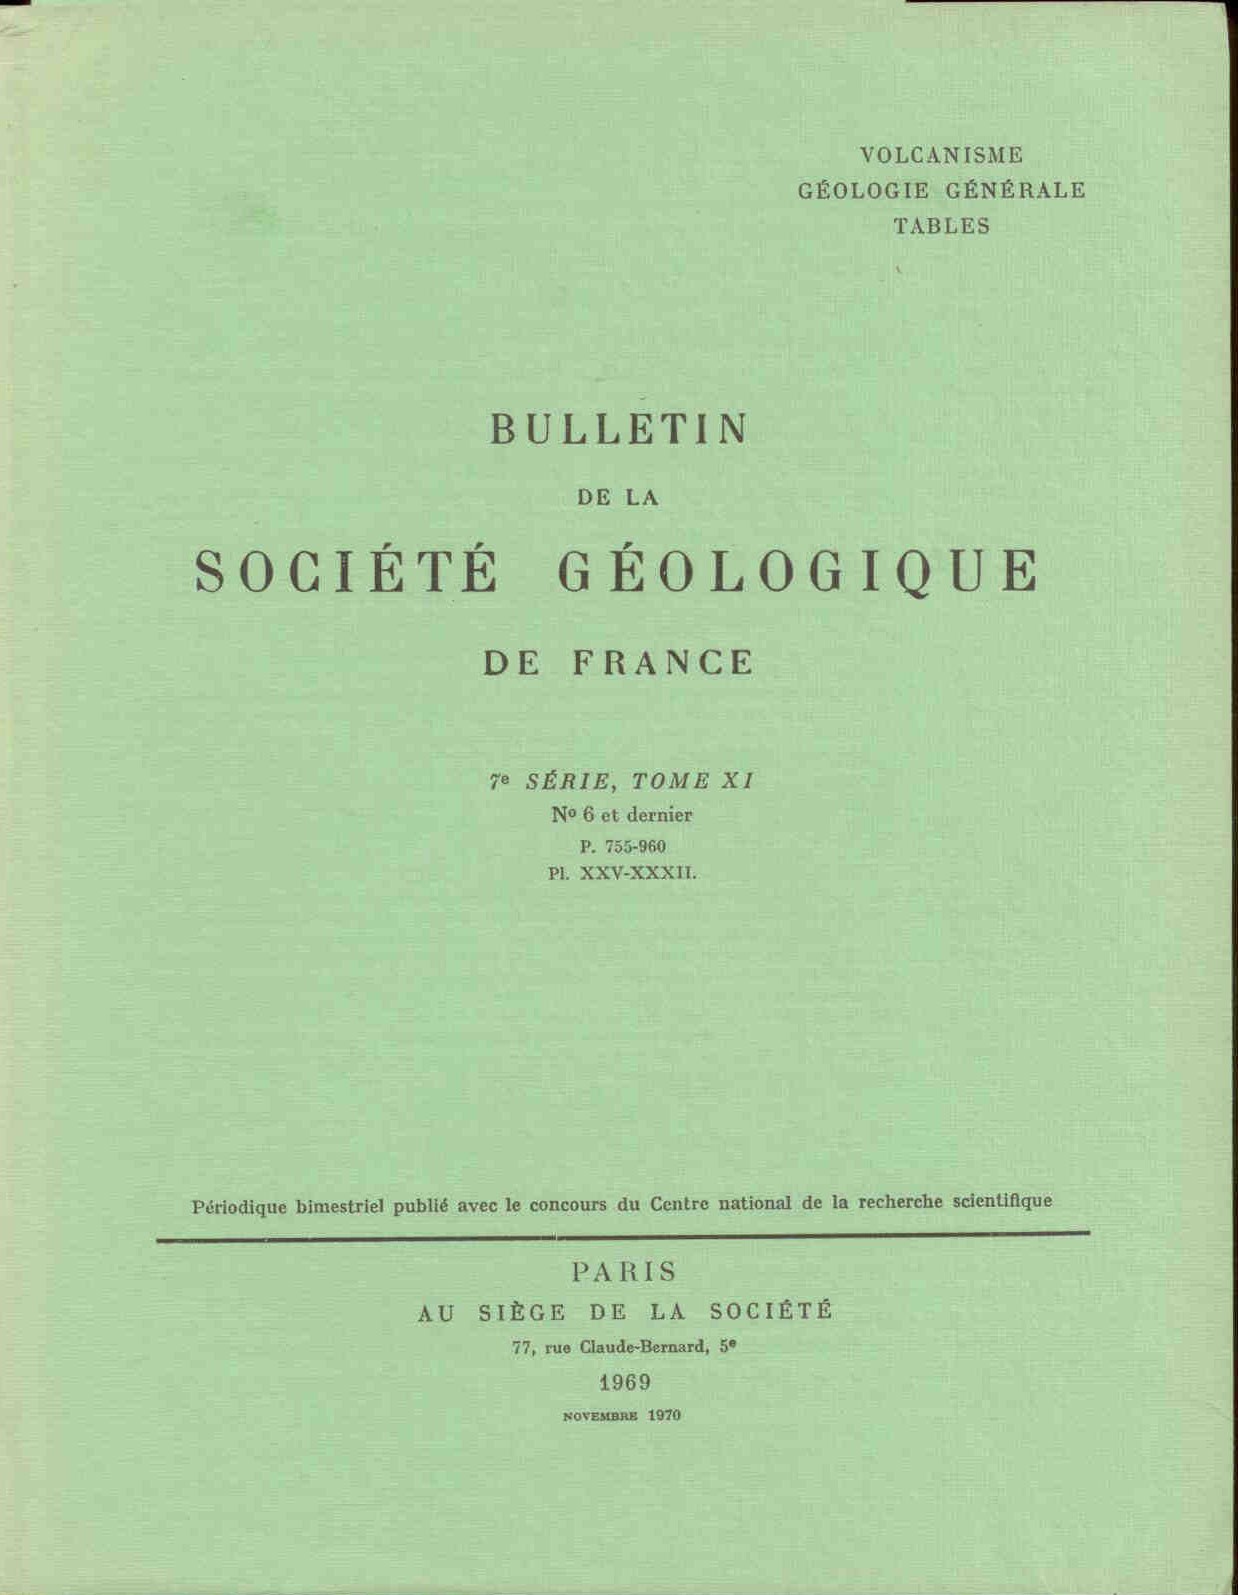 Collectif: Bulletin de la Societe Geologique de France. 7e serie, tome XI.